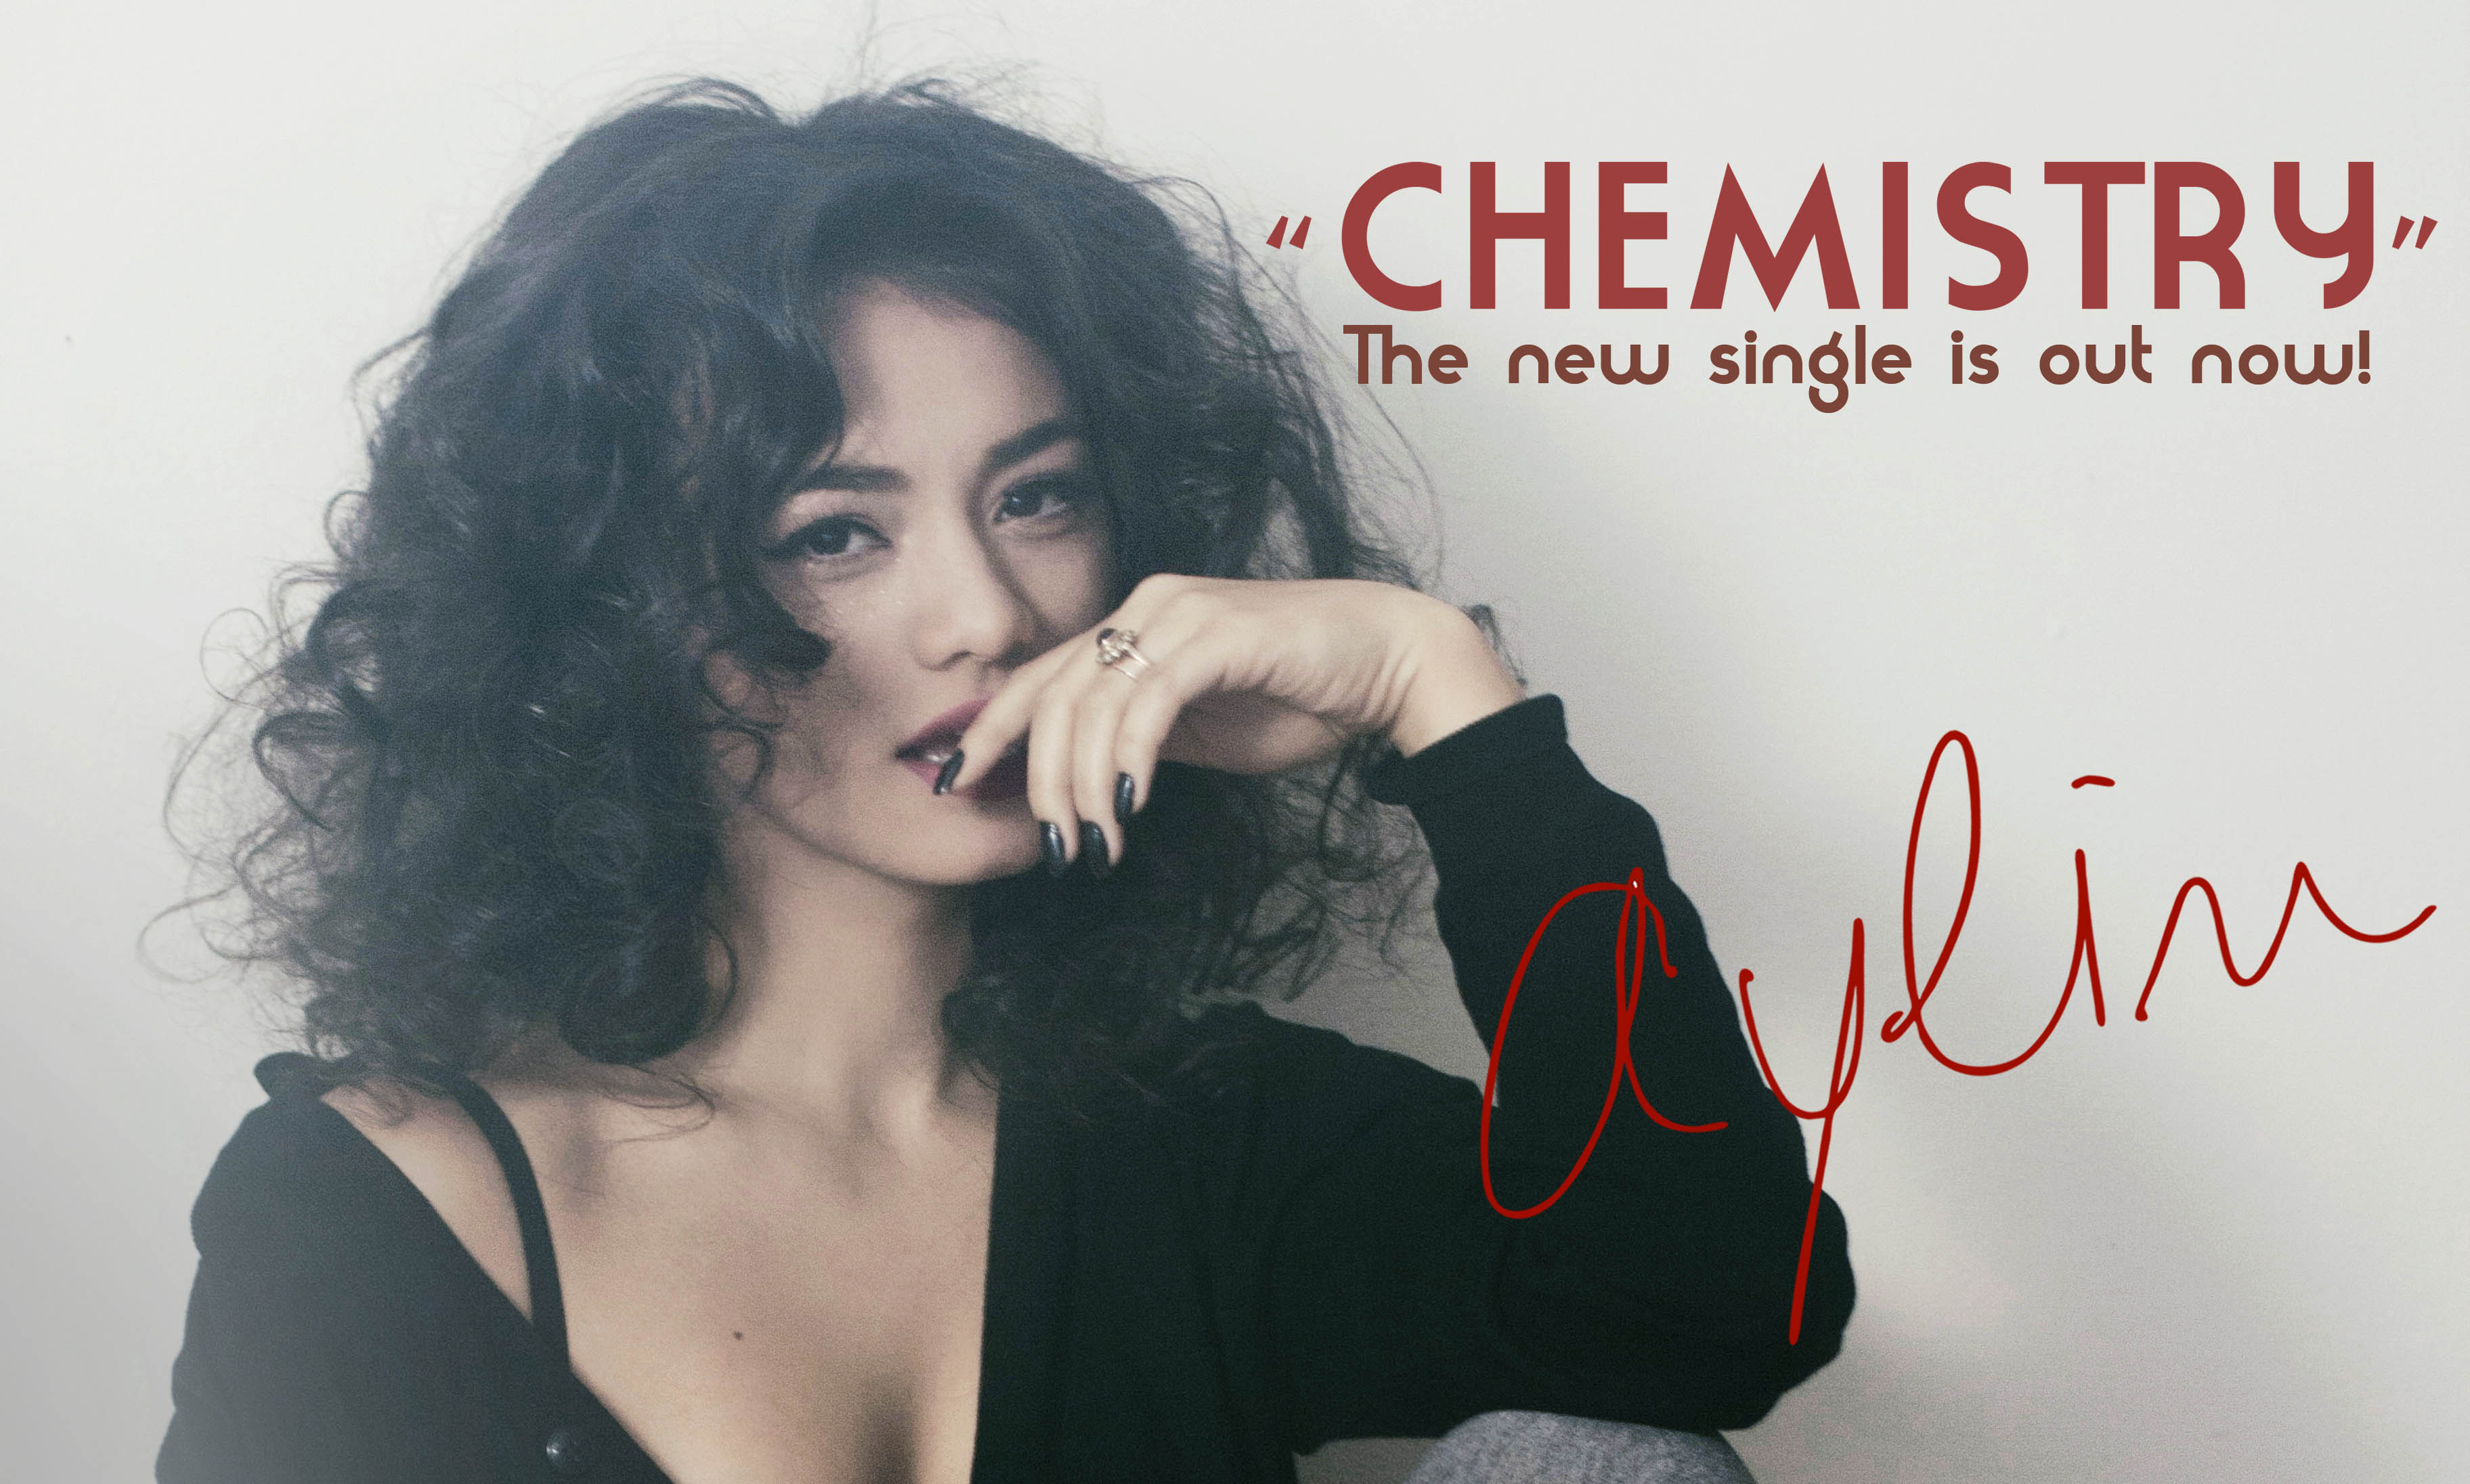 Aylin anseaza cel de-al doilea single Chemistry